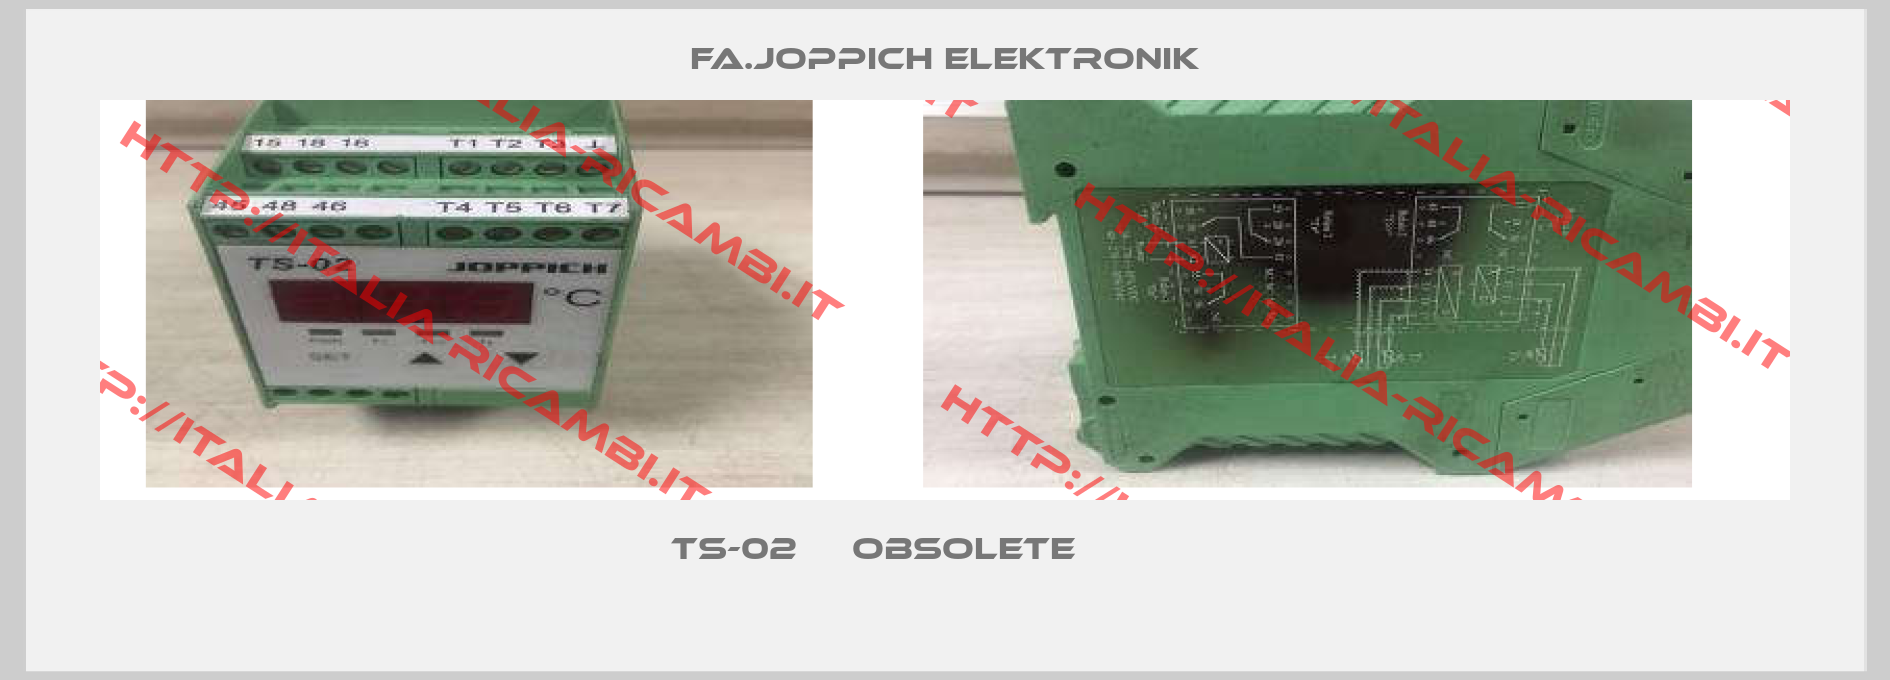 Fa.Joppich Elektronik- TS-02     obsolete              